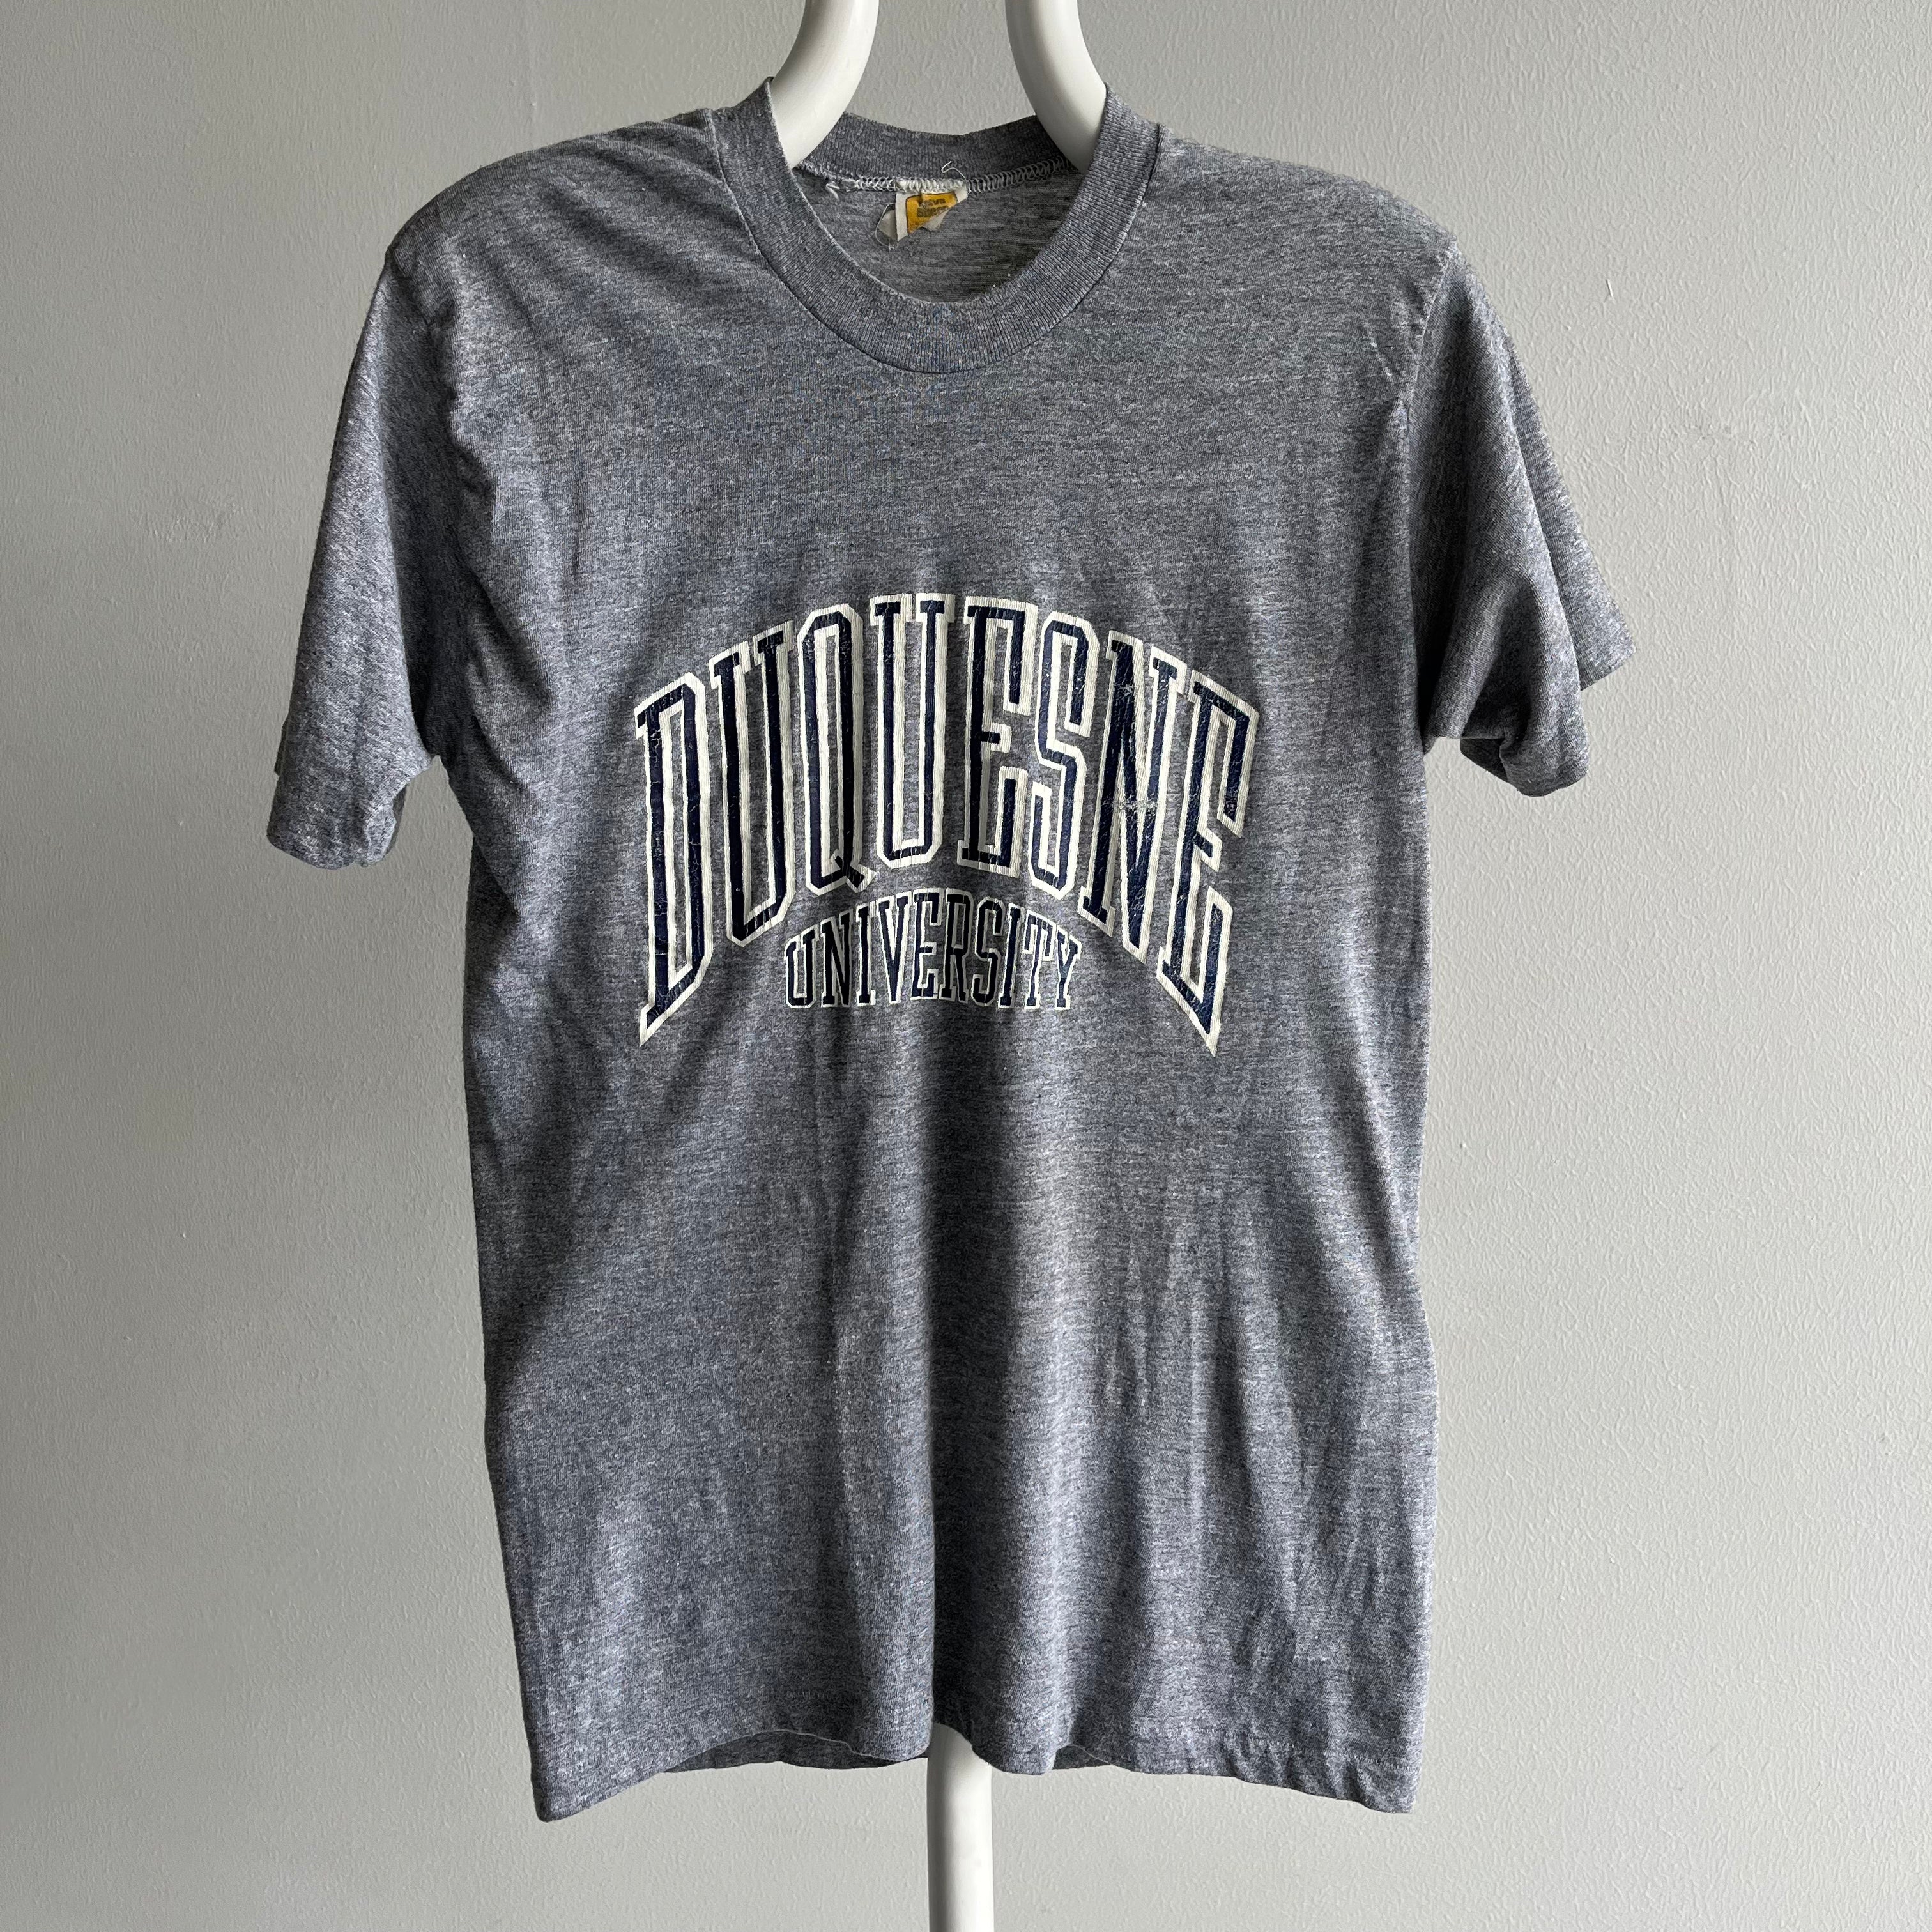 1970/80s Duquesne University T-Shirt by Velva Sheen